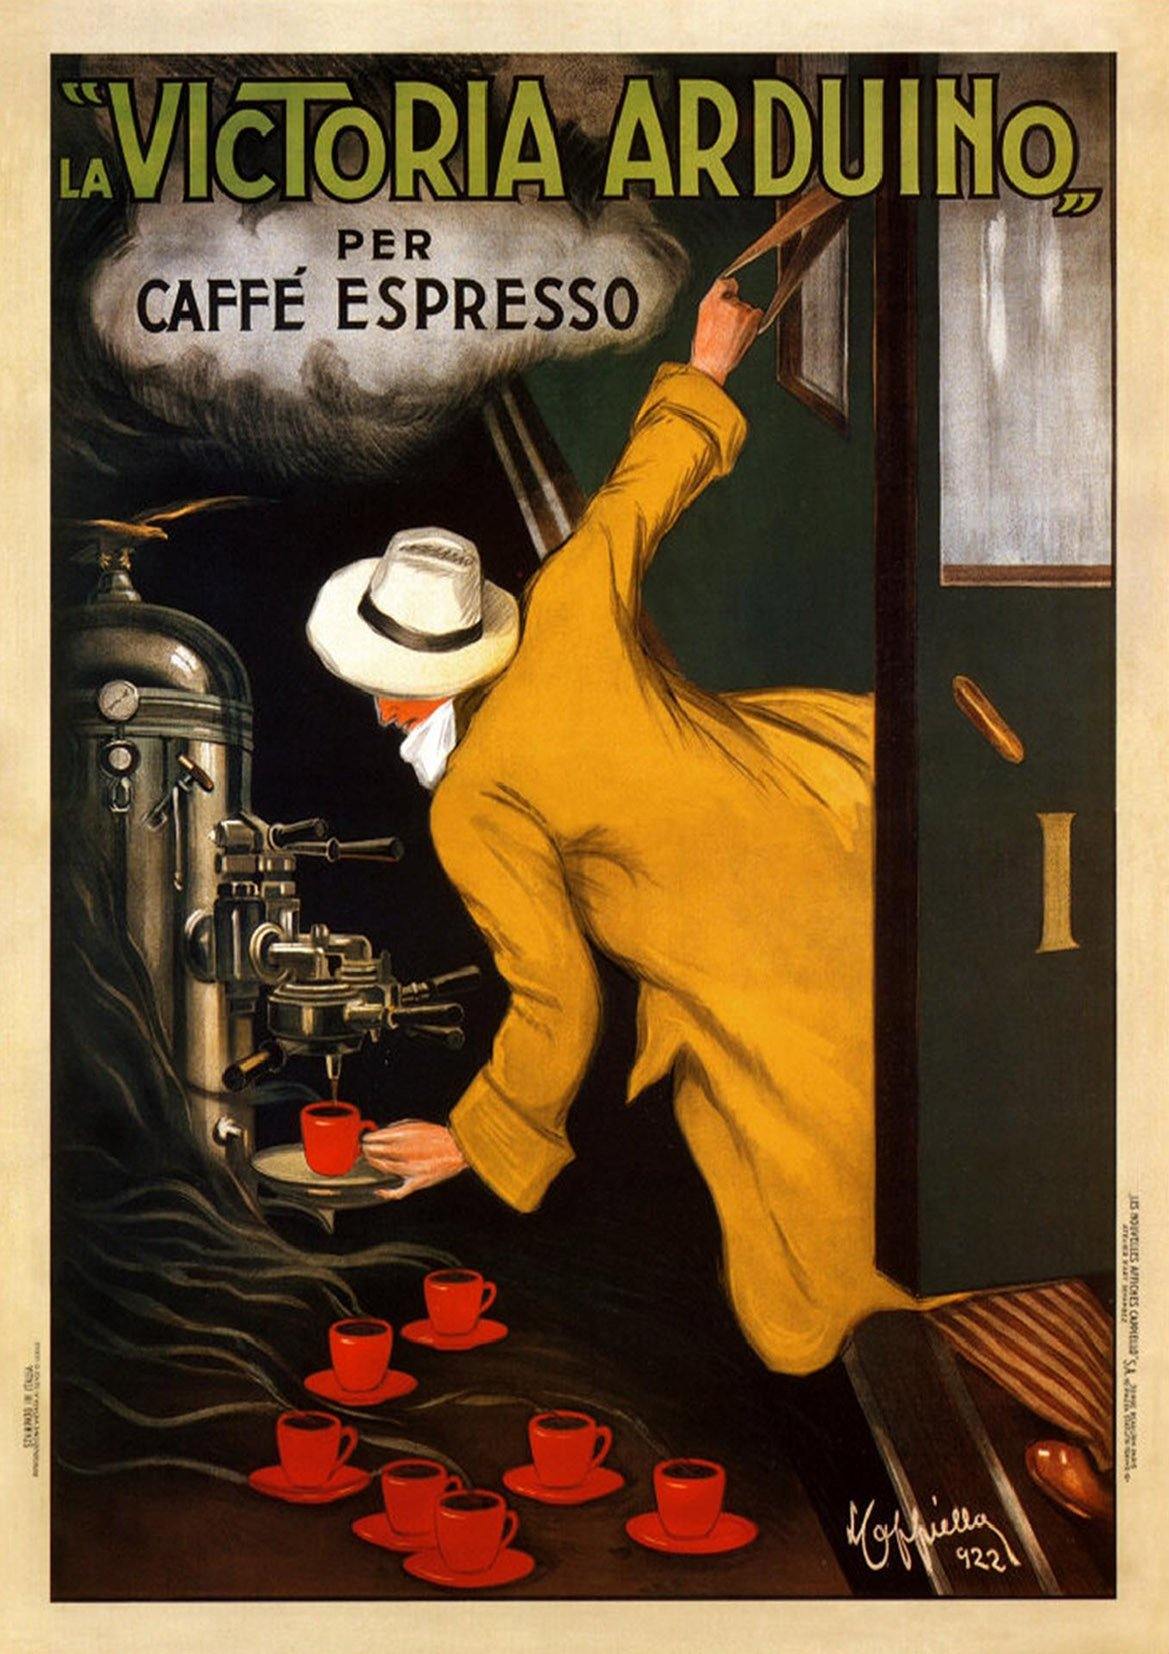 VINTAGE COFFEE POSTER: Old Caffé Espresso Advertisement Art Print - Pimlico Prints